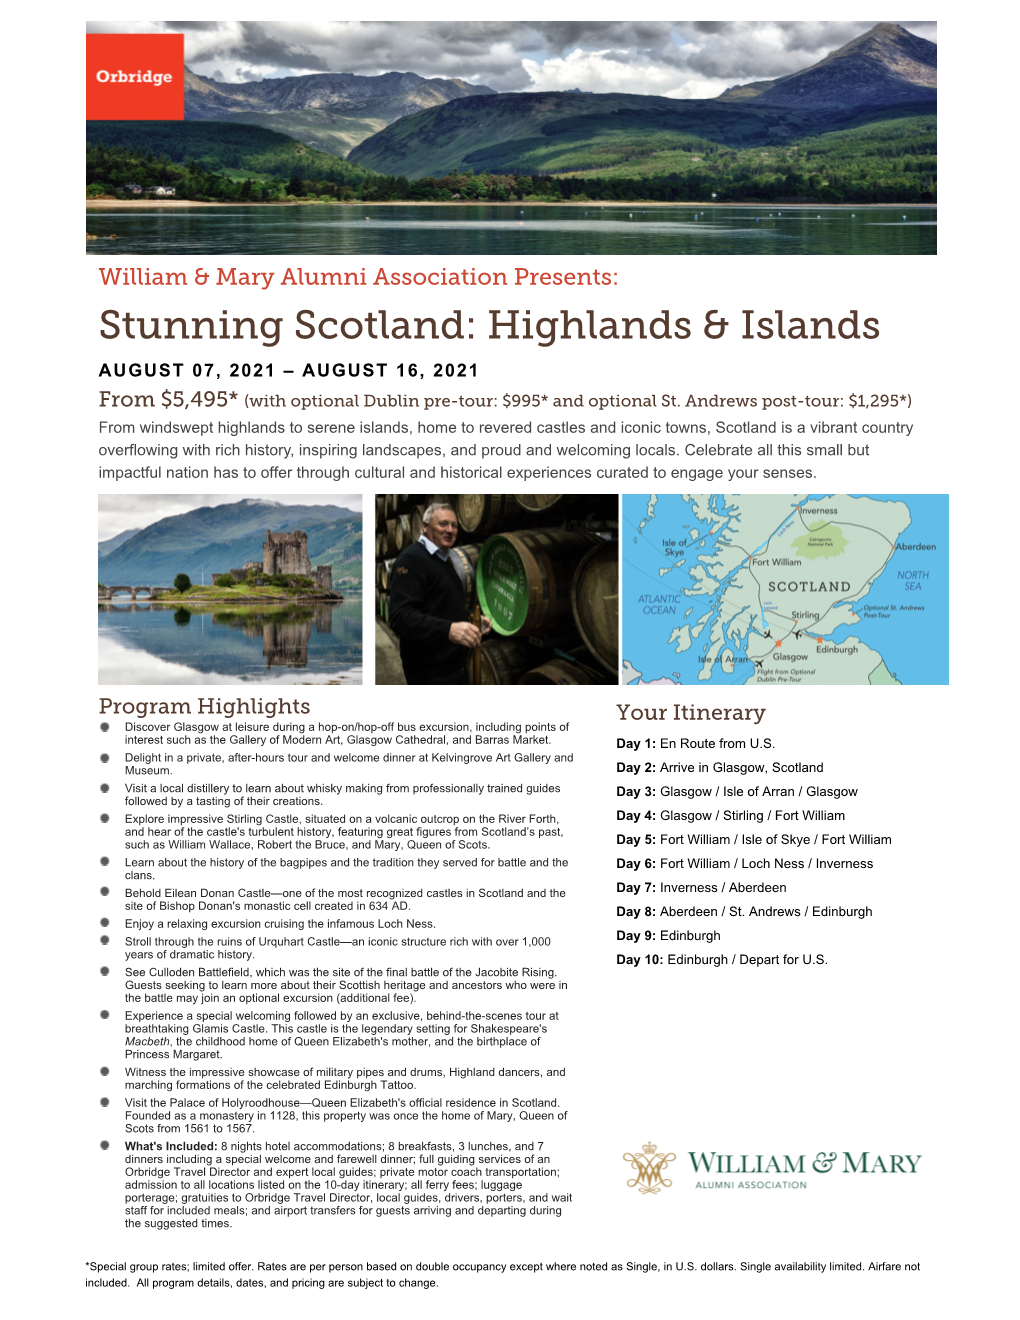 Stunning Scotland: Highlands & Islands